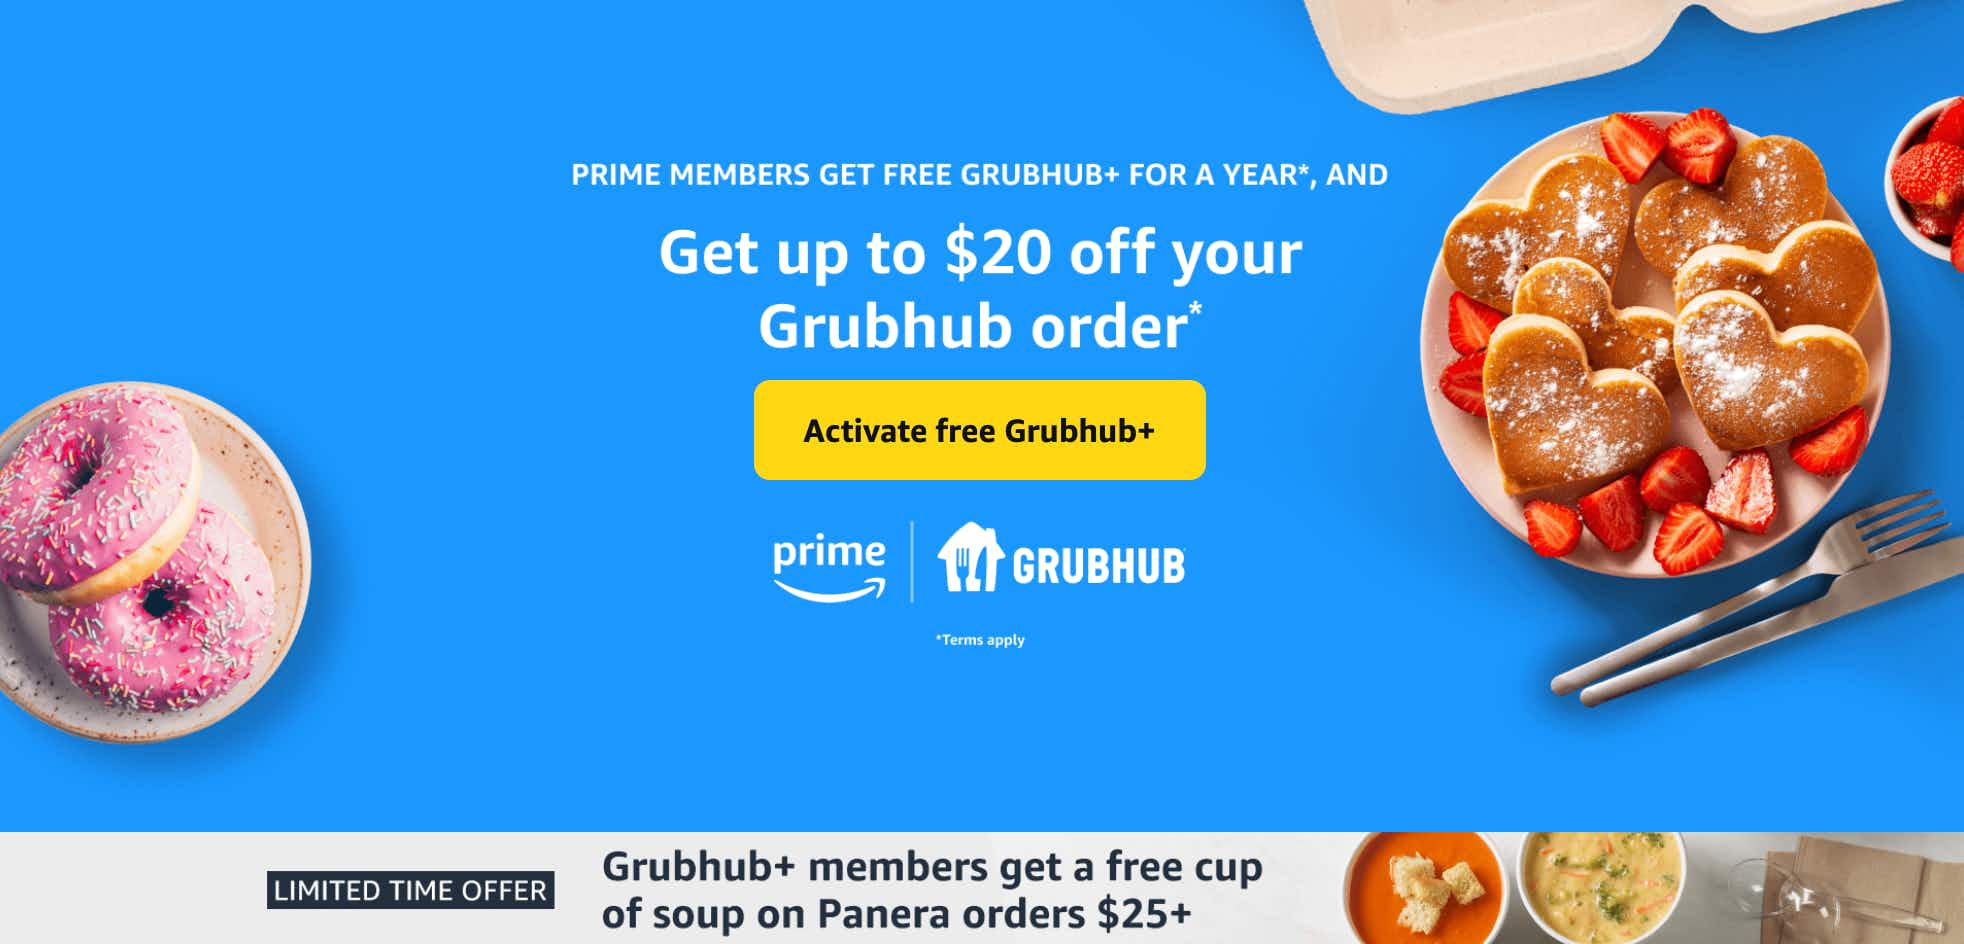 Amazon Grubhub+ offer